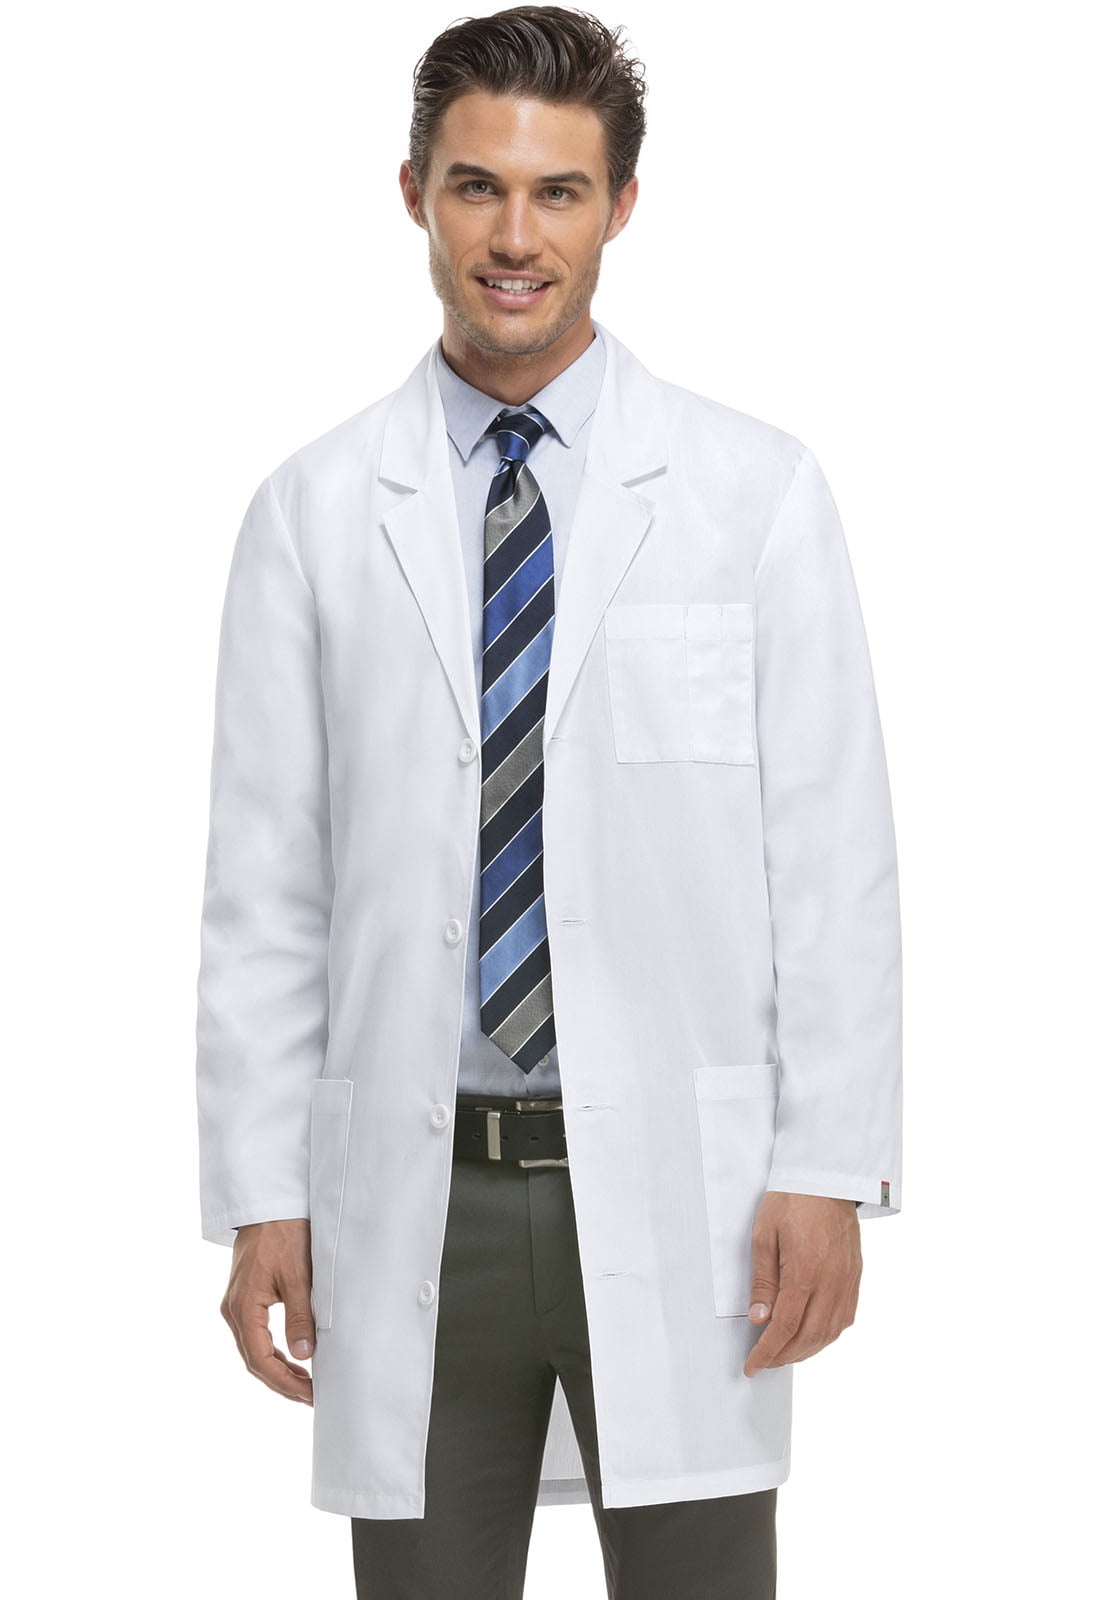 Mens Women Lab Coat Medical Unisex Doctor Coats Jackets Nursing Outwear Cloth US